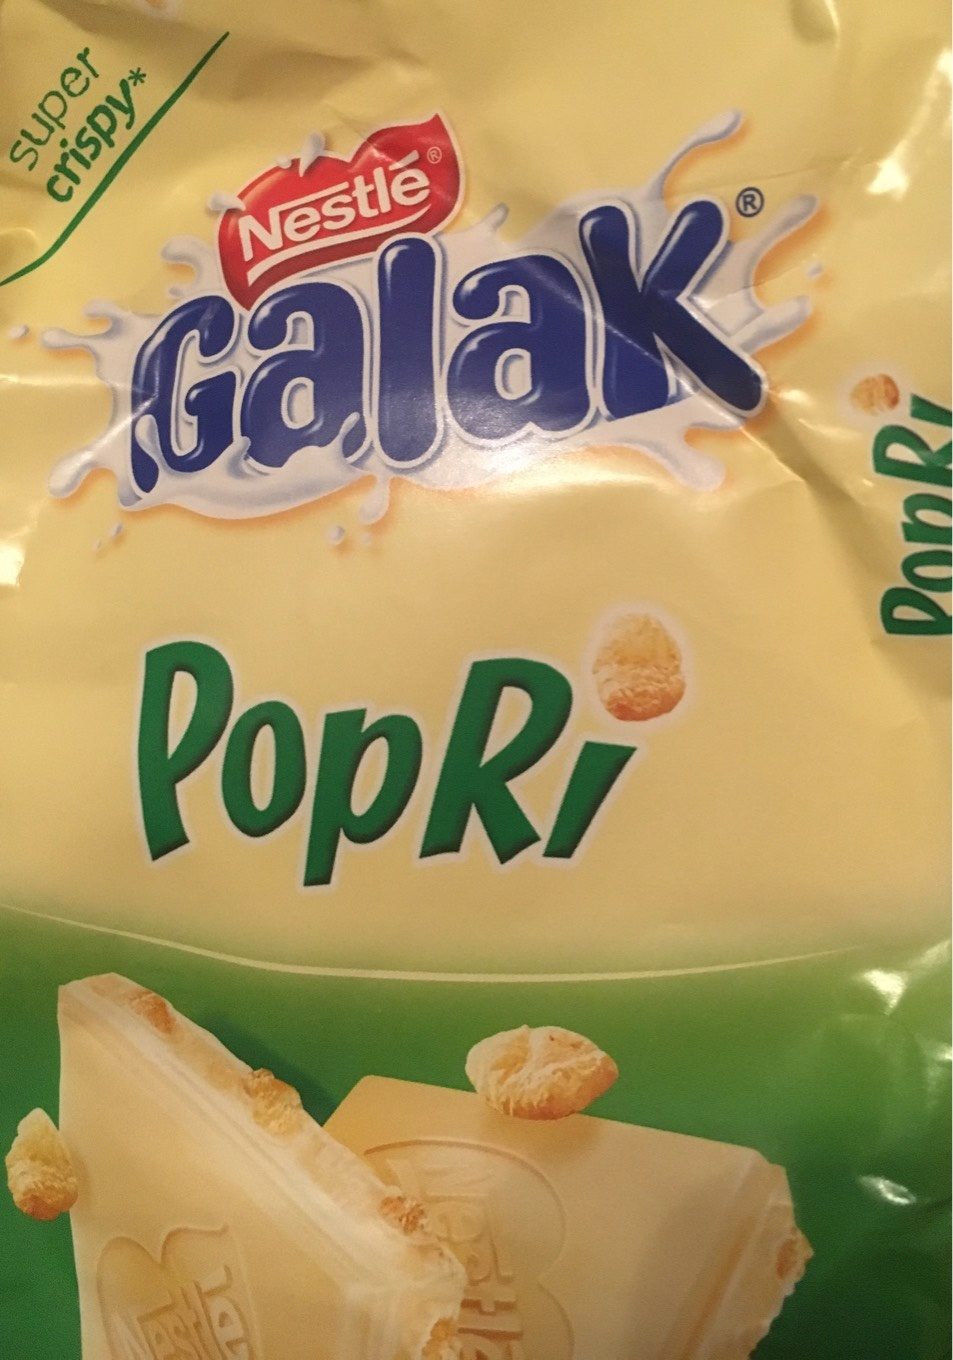 Galak popri - Produit